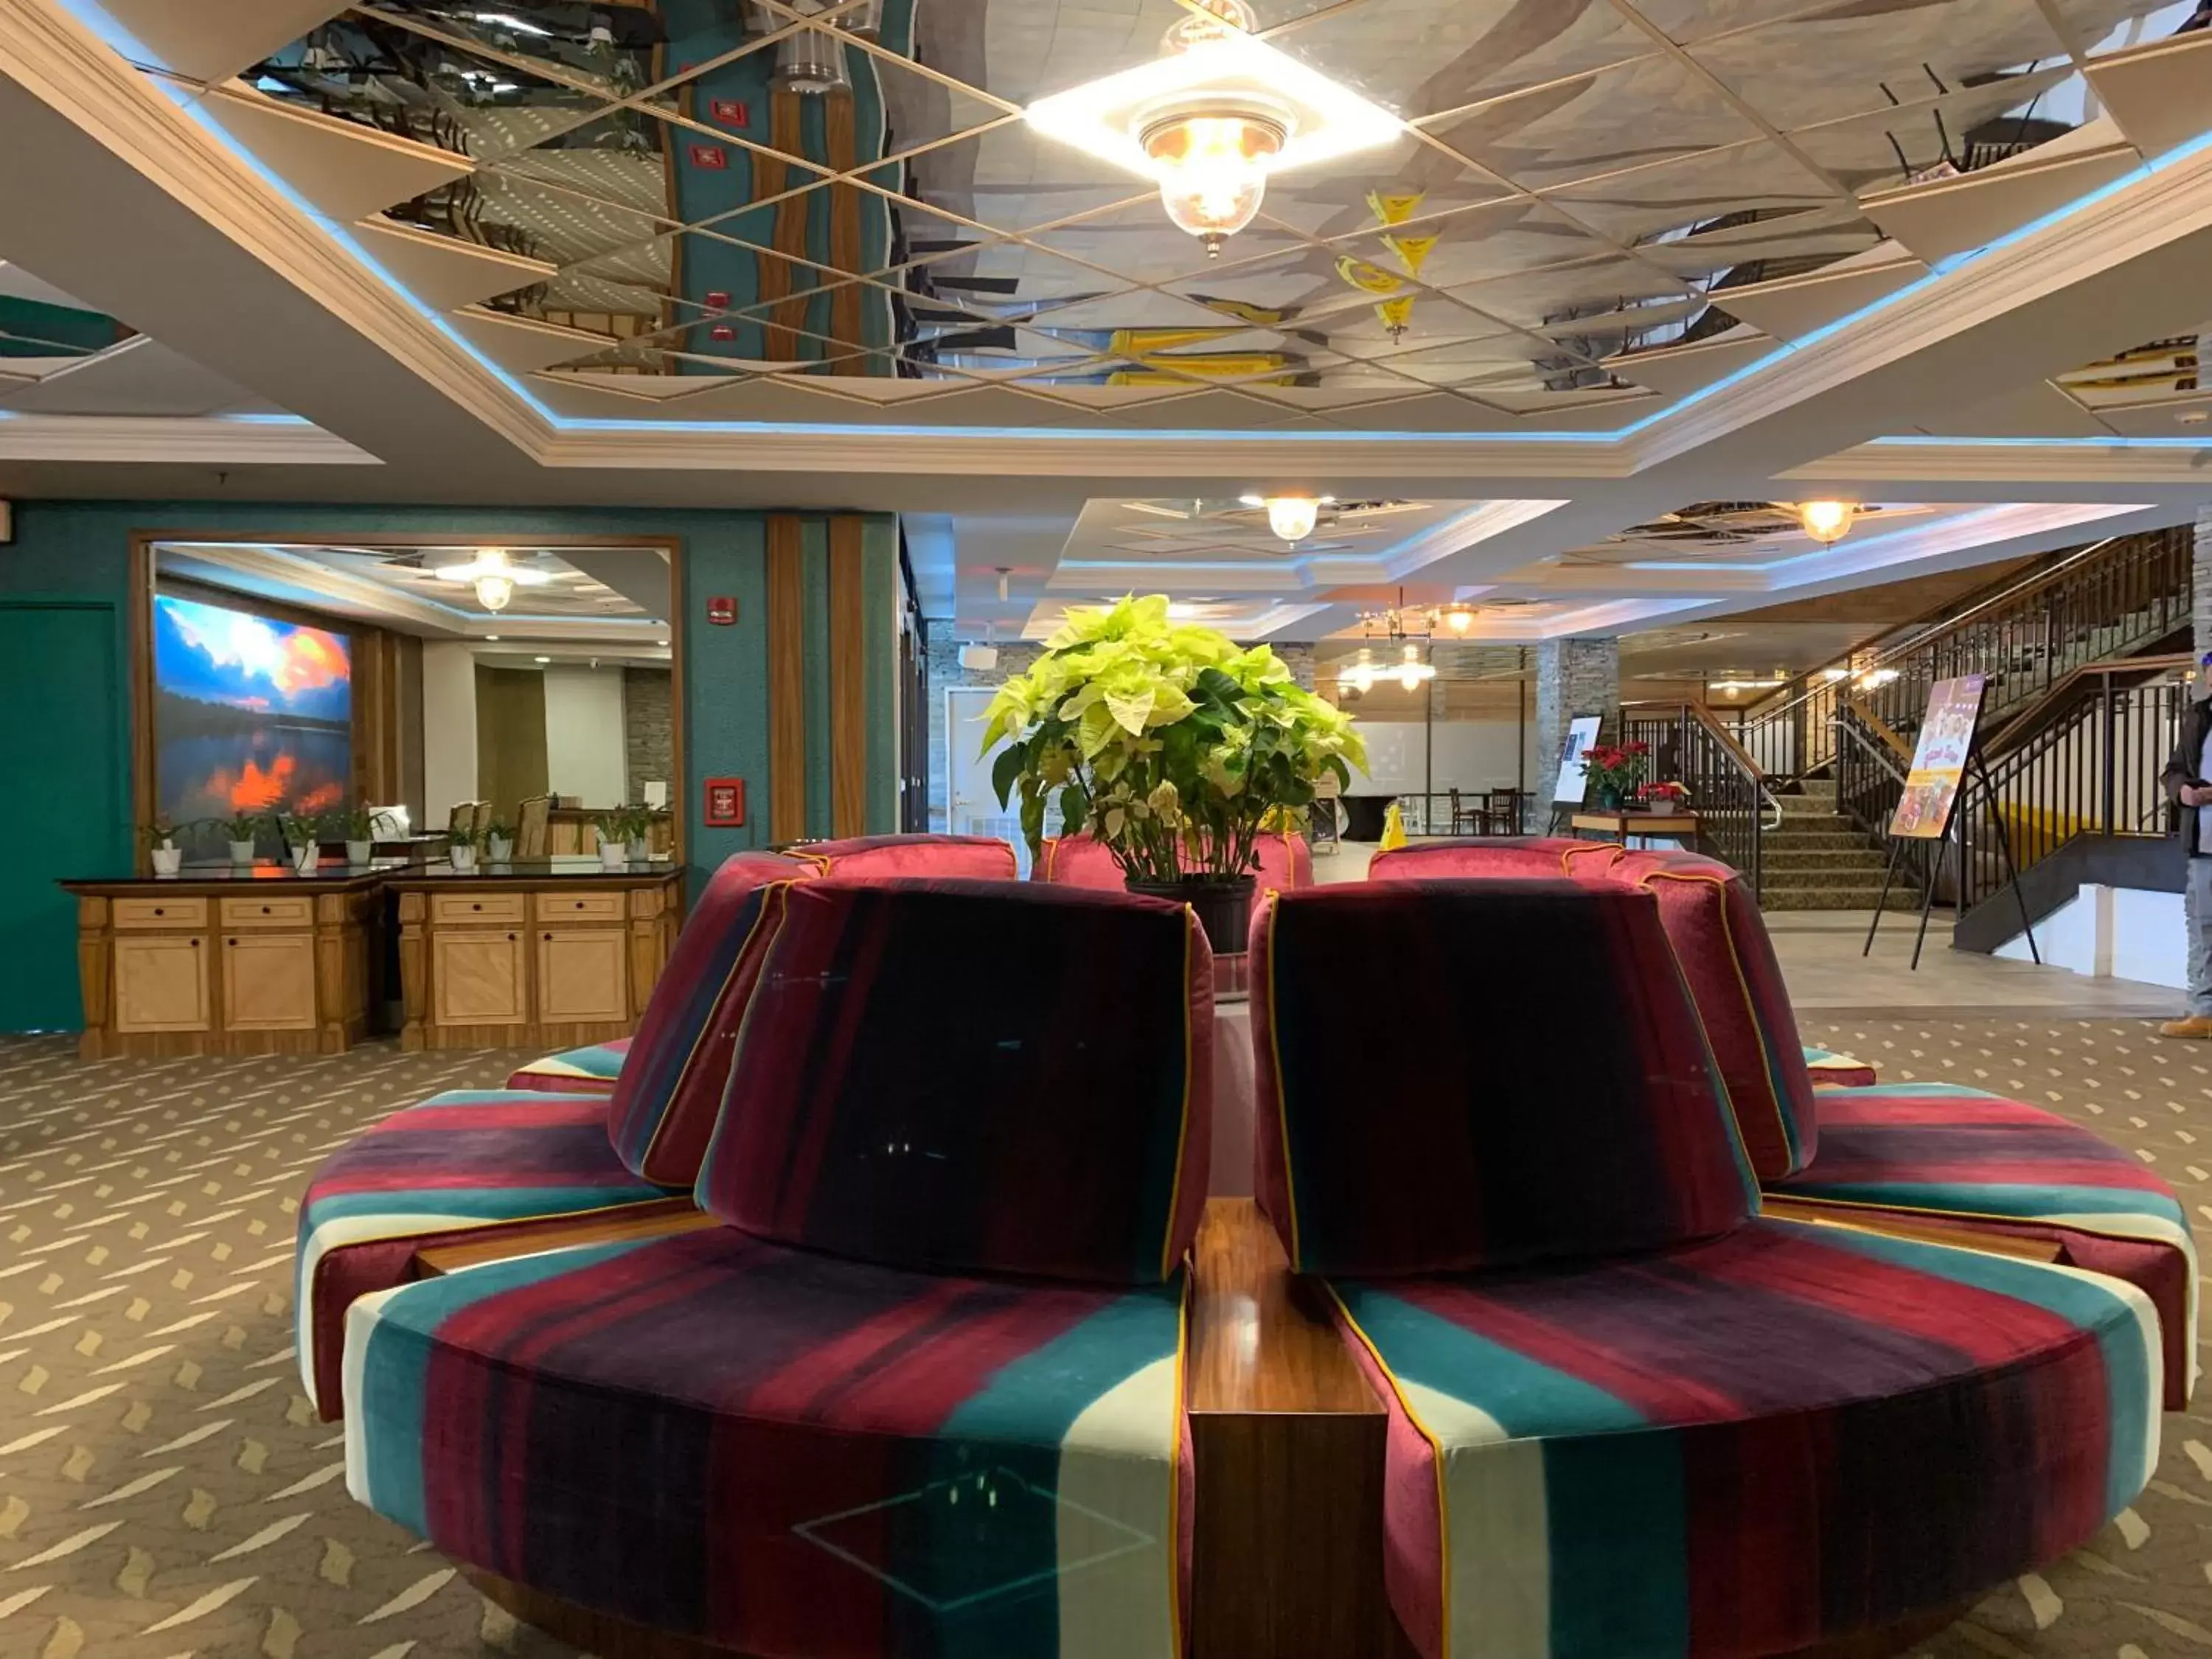 Lobby or reception, Lobby/Reception in Split Rock Resort